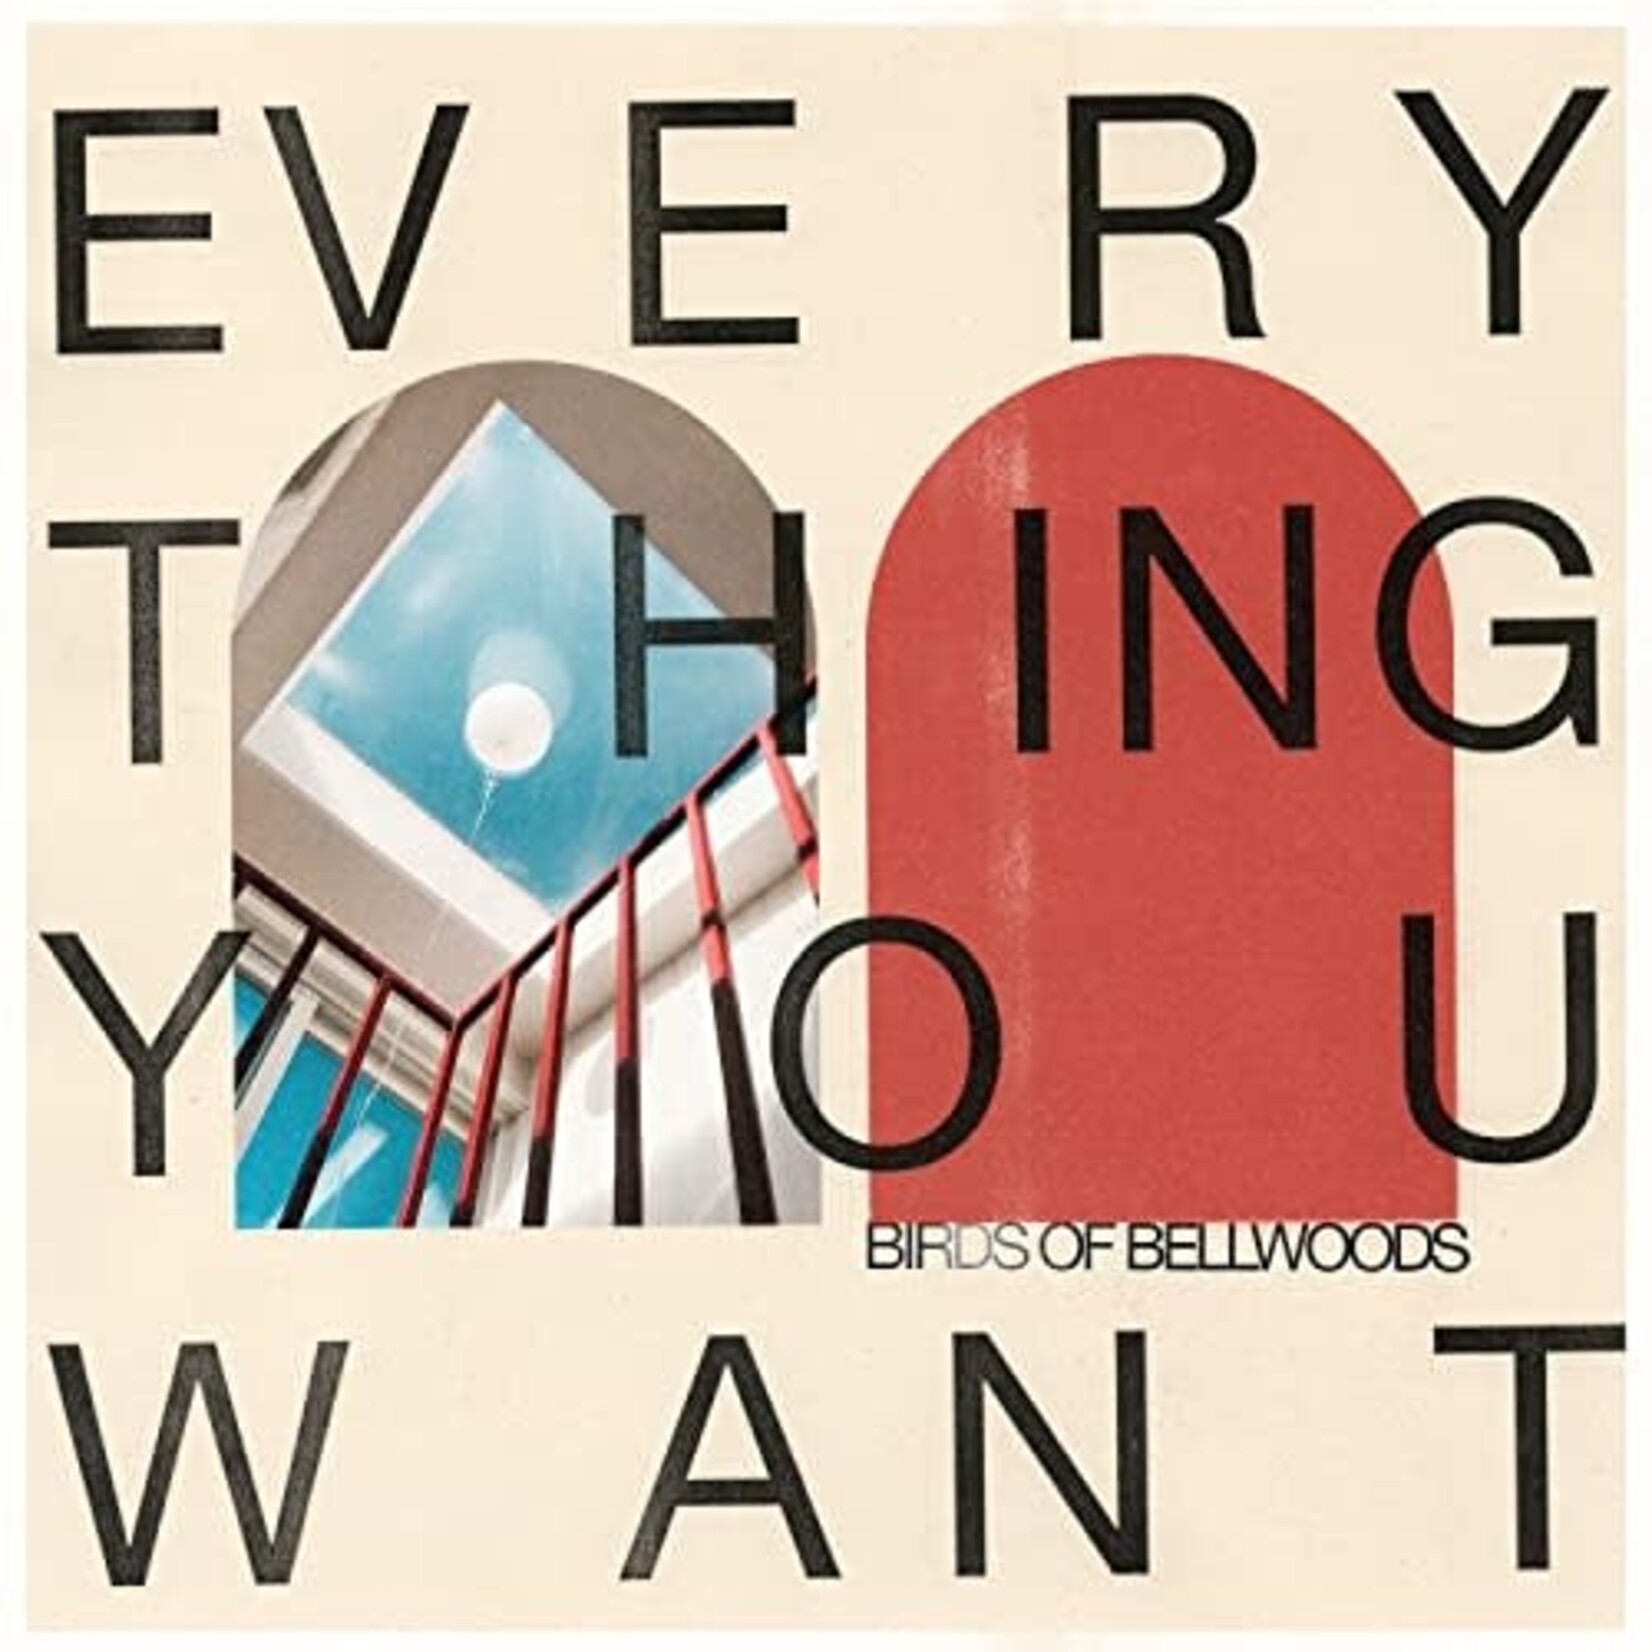 [New] Birds Of Bellwoods: Everything You Want (180g, white vinyl) [MNRK RECORDS]